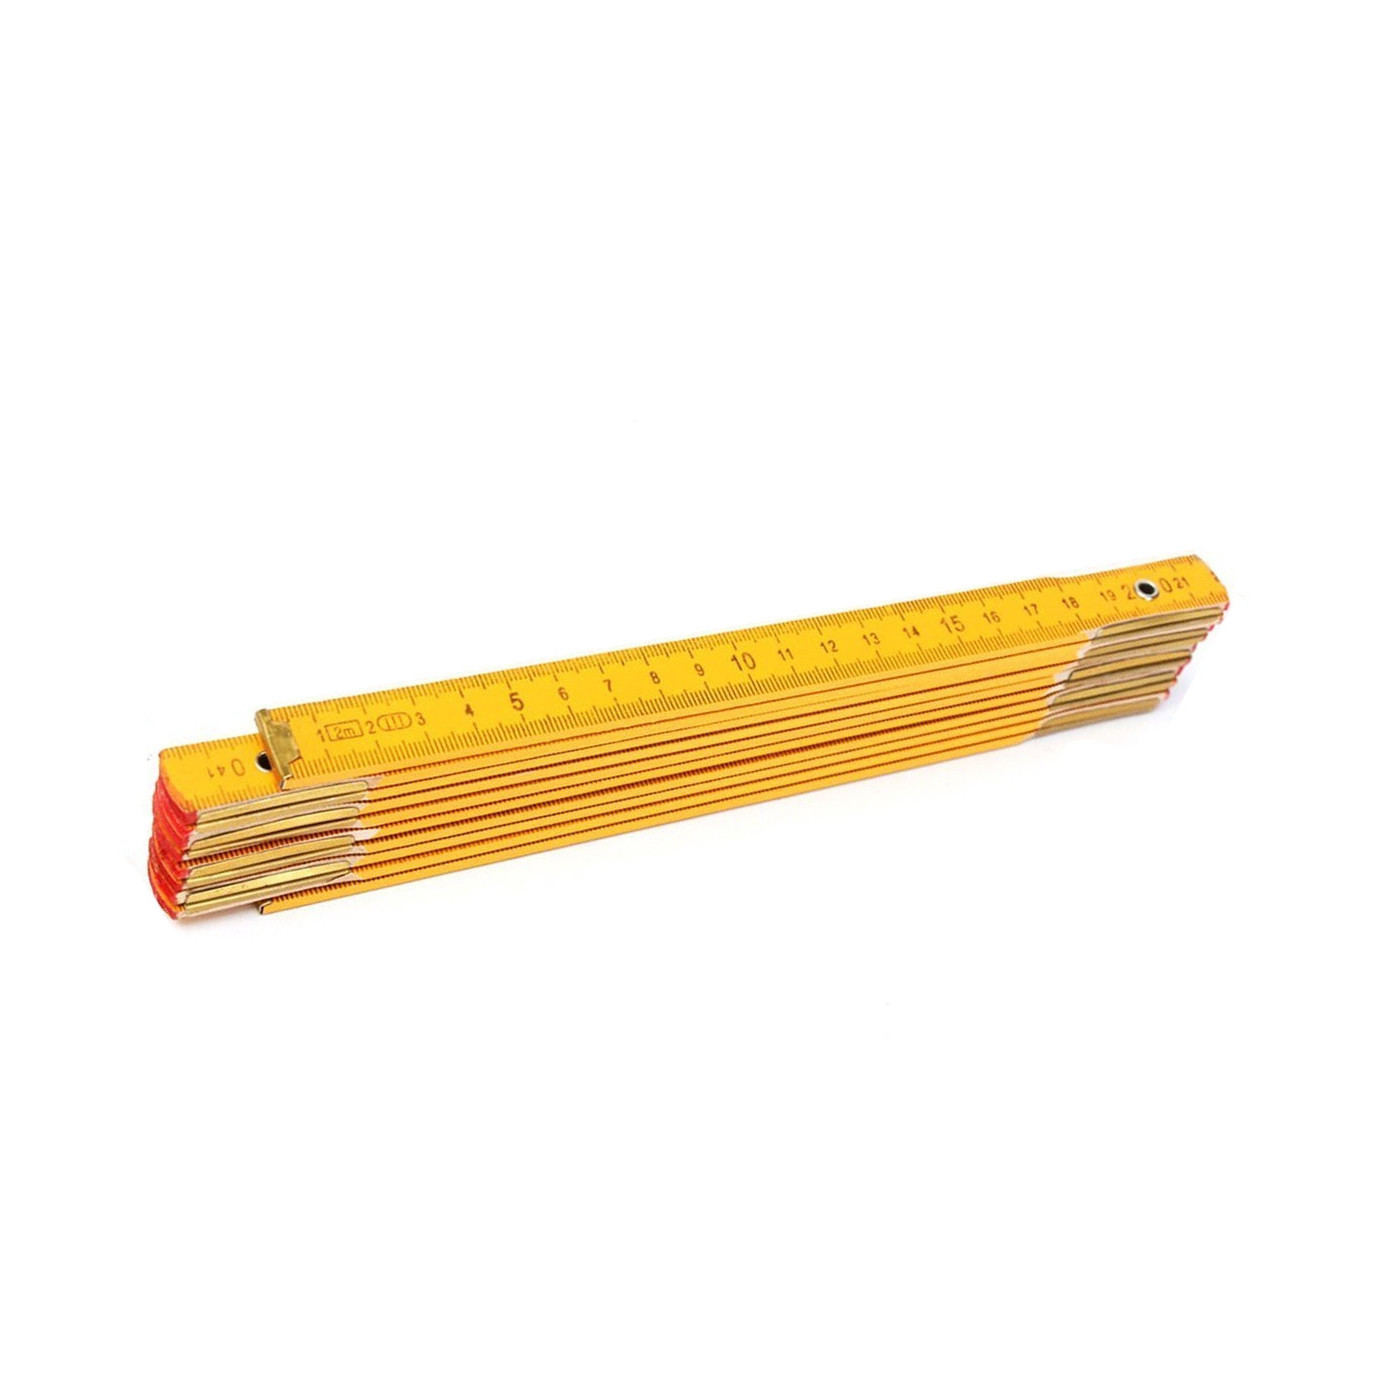 EORTA Folding Ruler Wooden 200cm Ruler Portable Metric Measuring Tools for Builder Carpenter DIY Craft Office Yellow Gift 